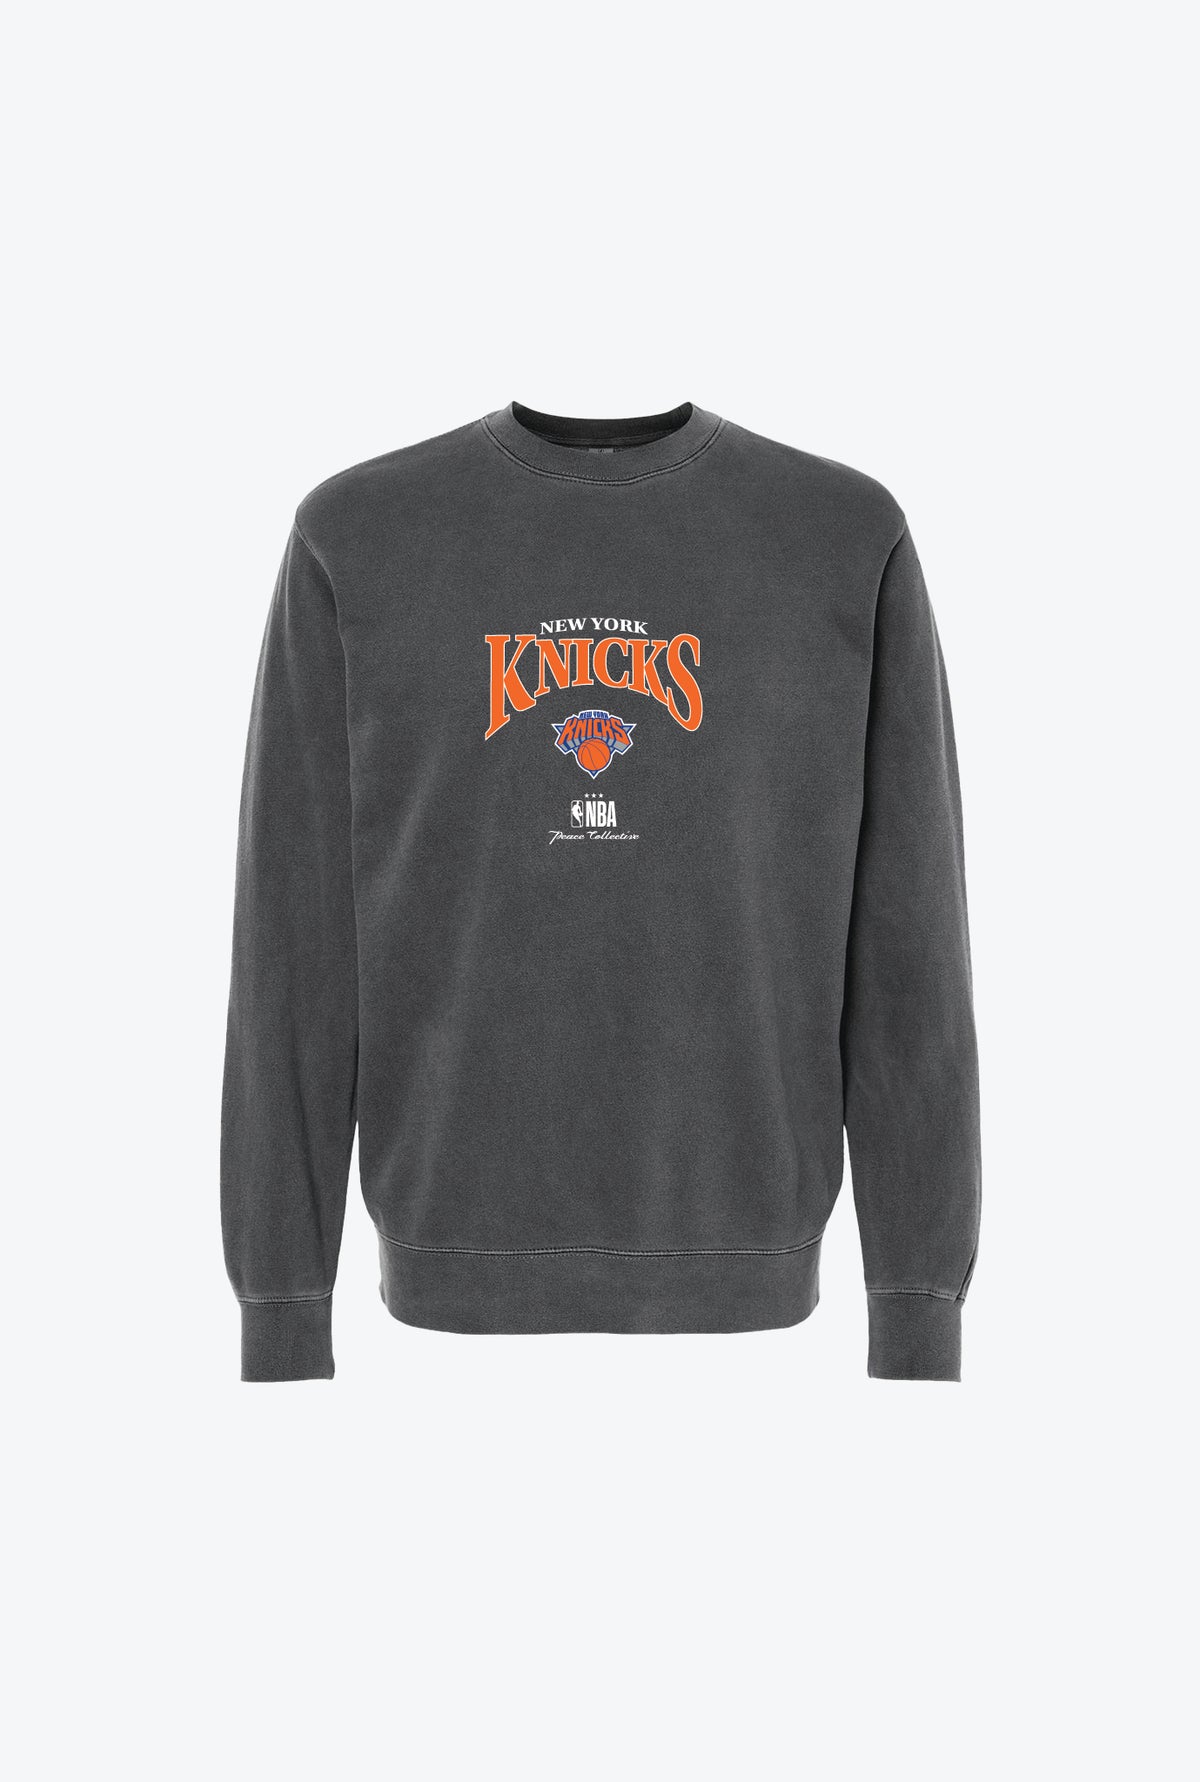 New York Knicks Pigment Dye Crewneck - Black